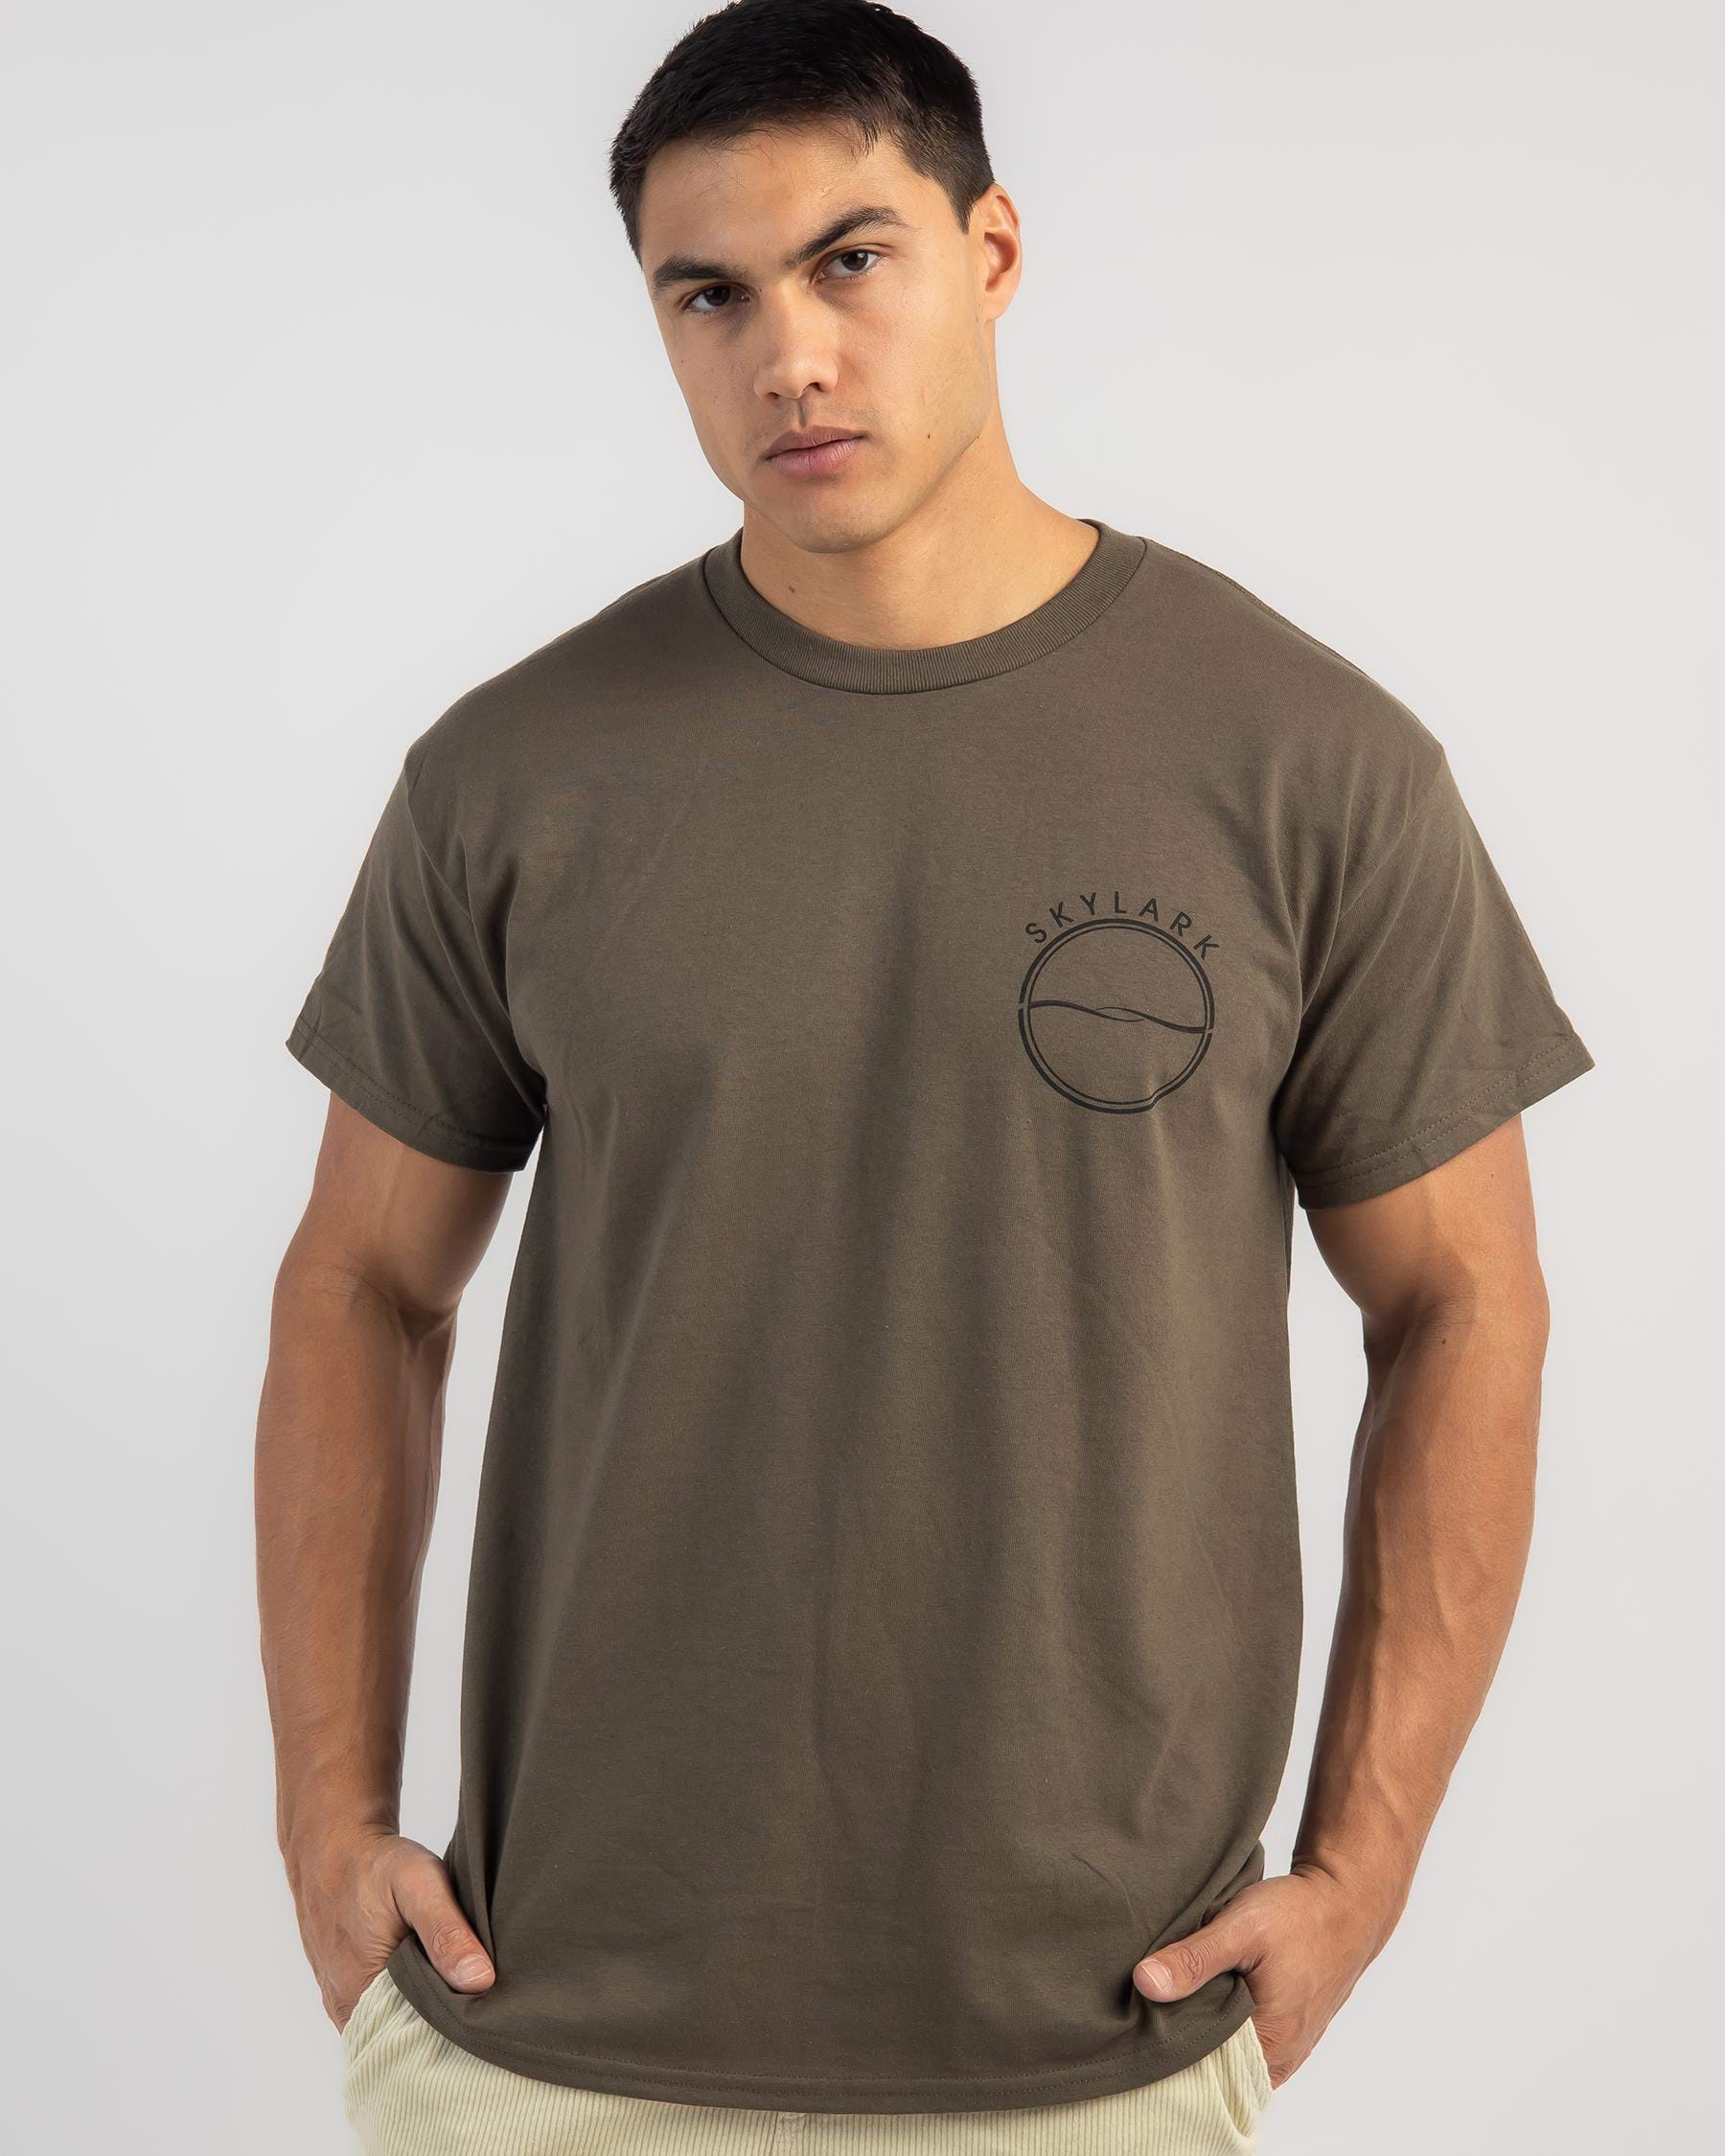 Shop Skylark Rebound T-Shirt In Olive - Fast Shipping & Easy Returns ...